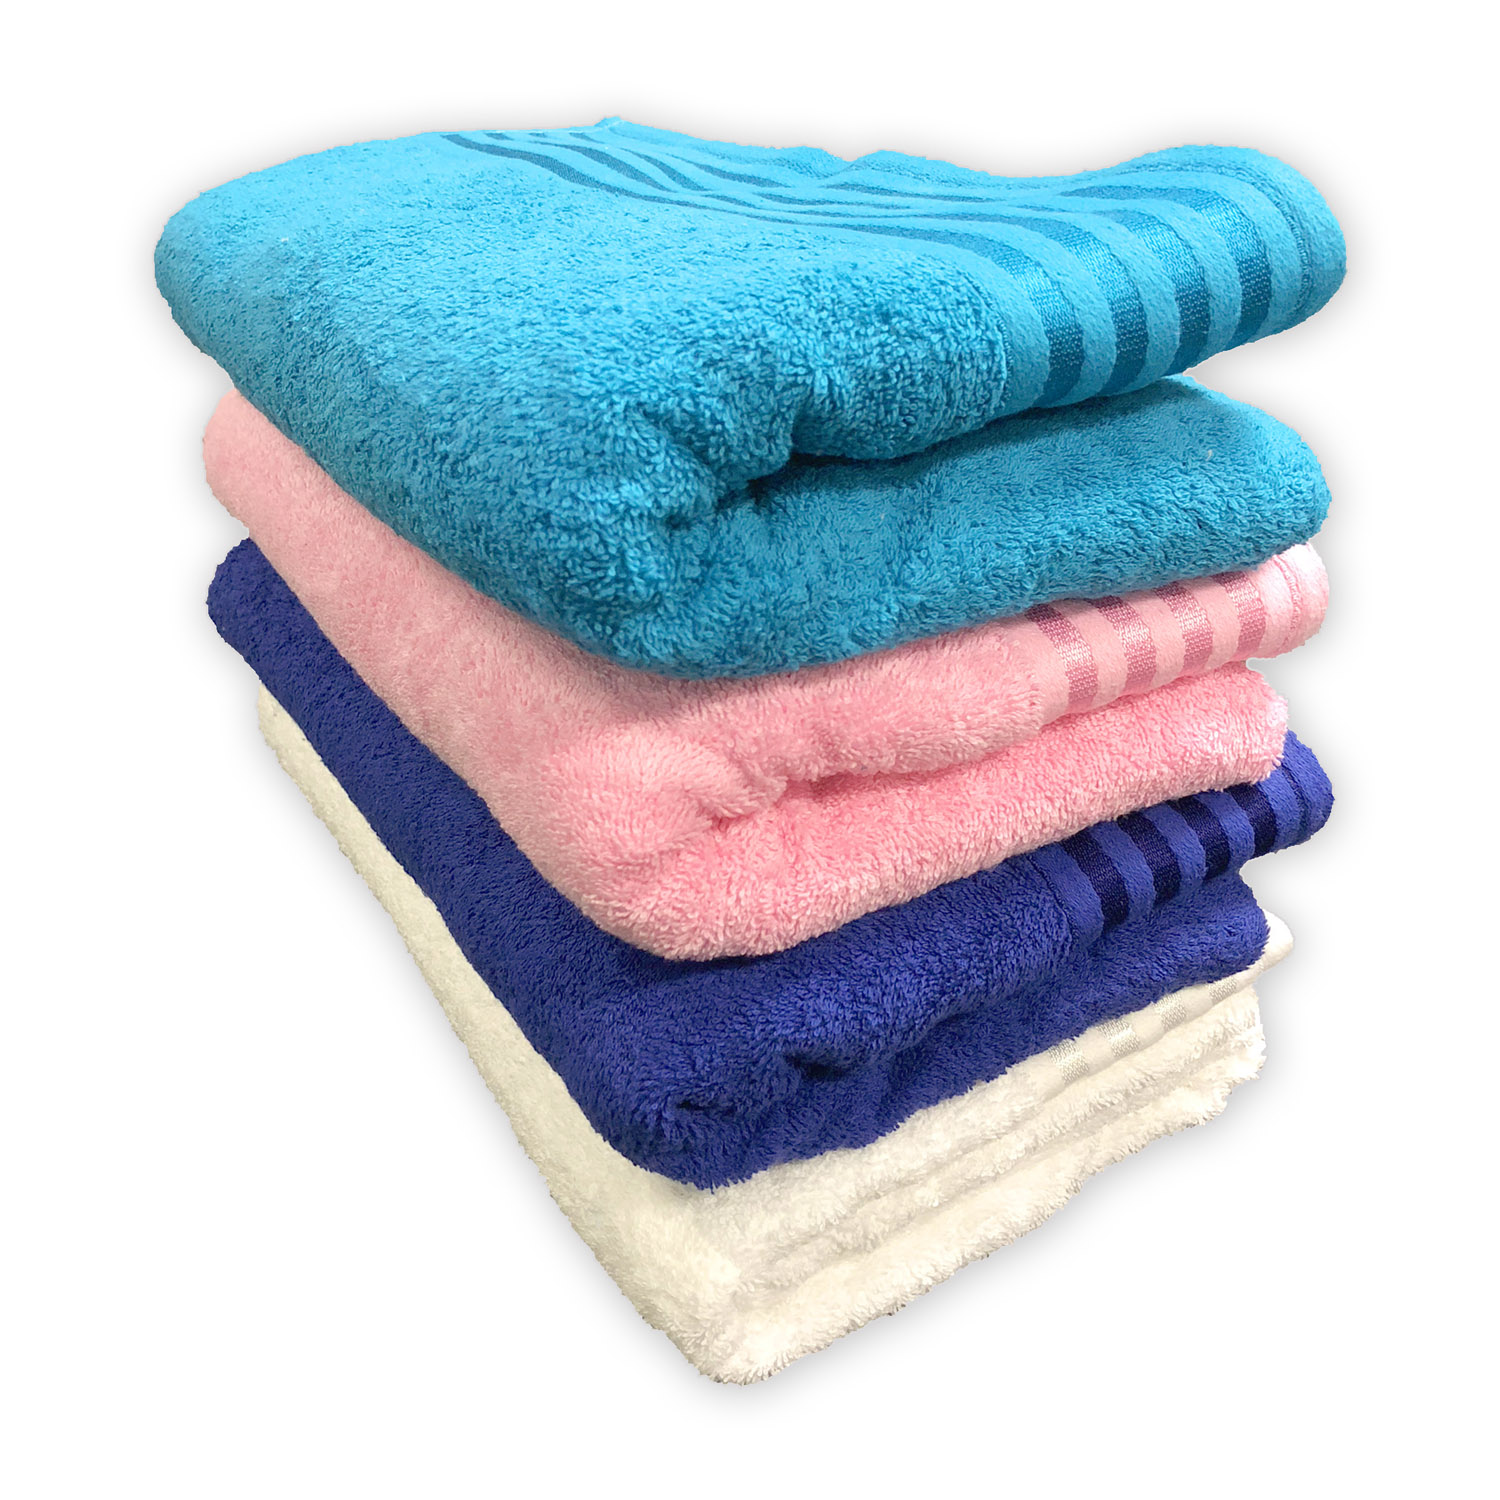 EMBROIDERED 34x68 Bath Towels Cotton 19.25 Lbs per Dz. 100% Cotton.